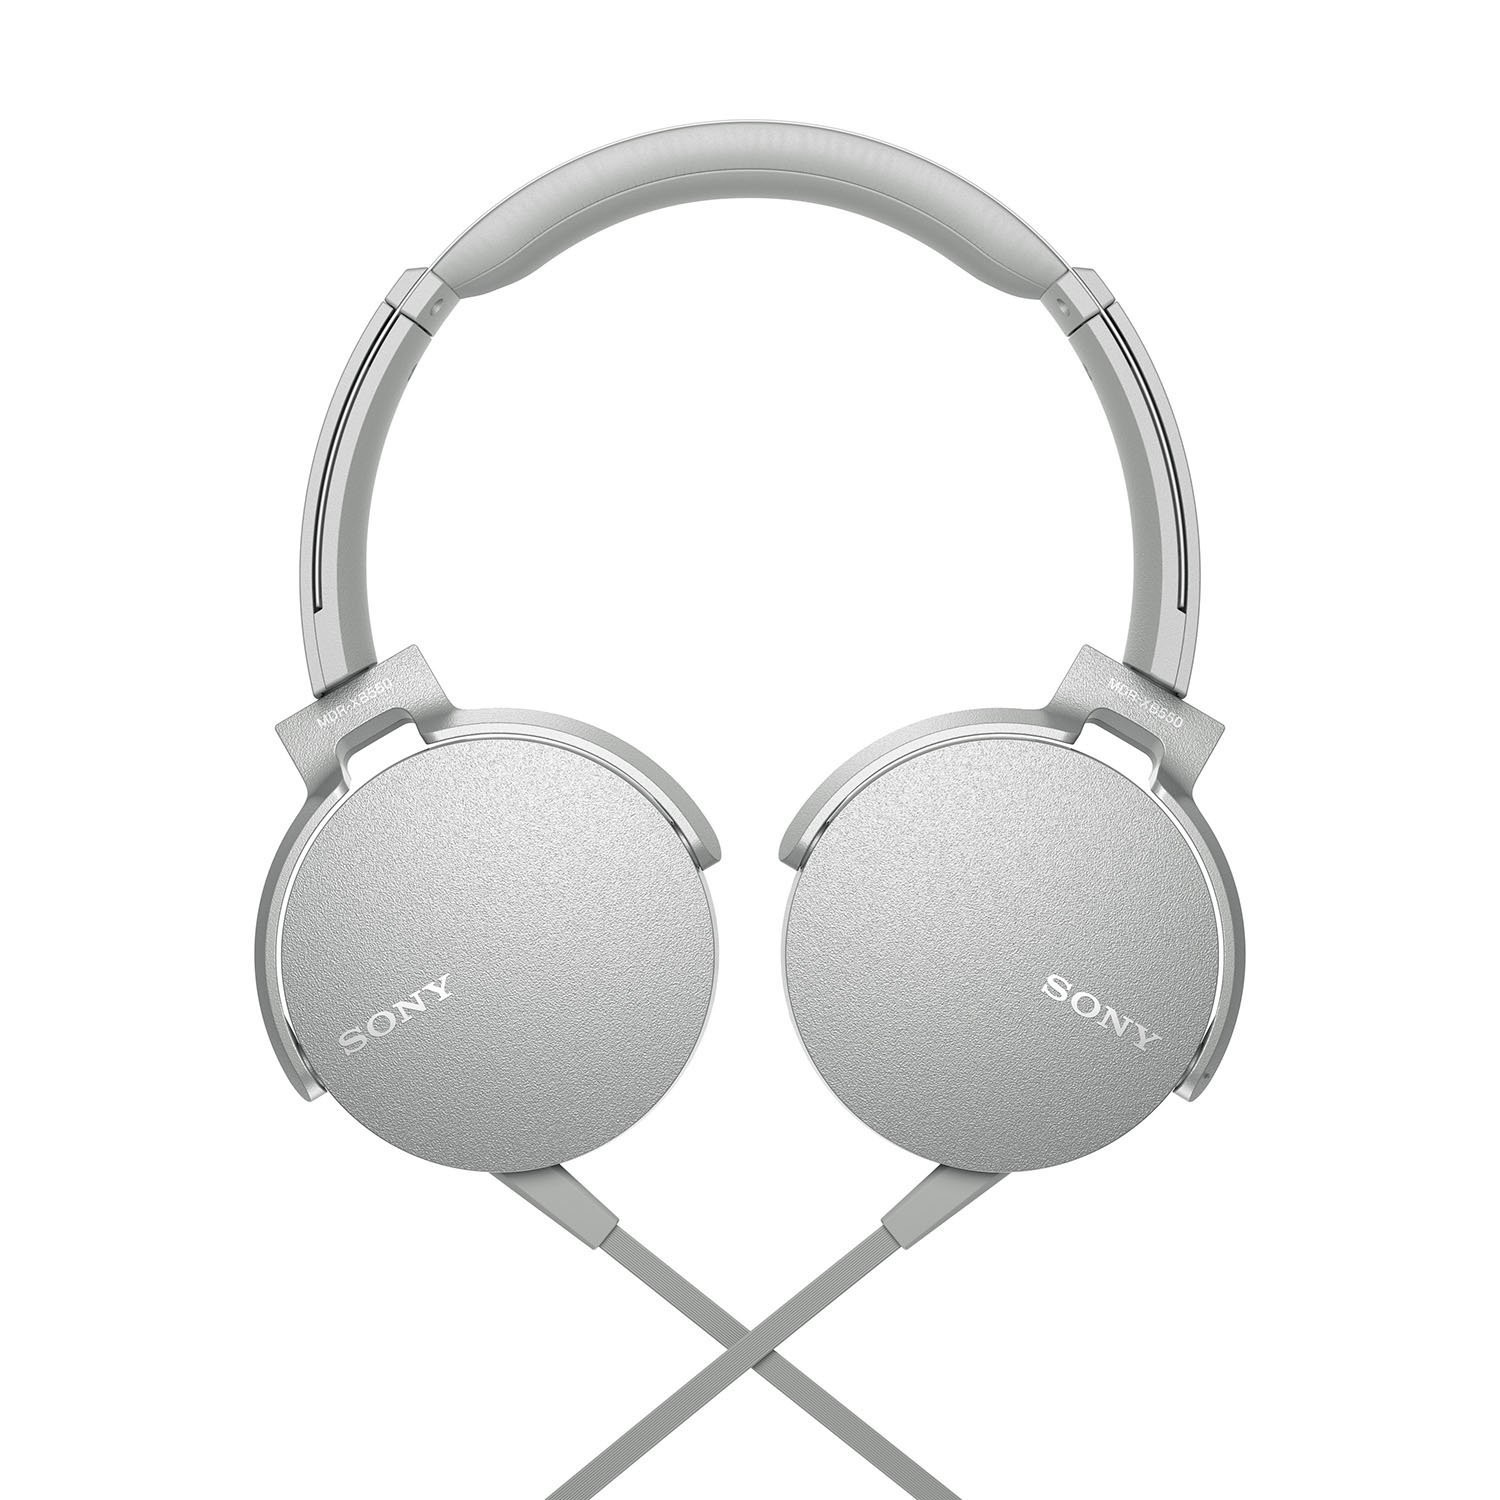 Sony Extra Bass MDR-XB550AP On-Ear Headphones, White